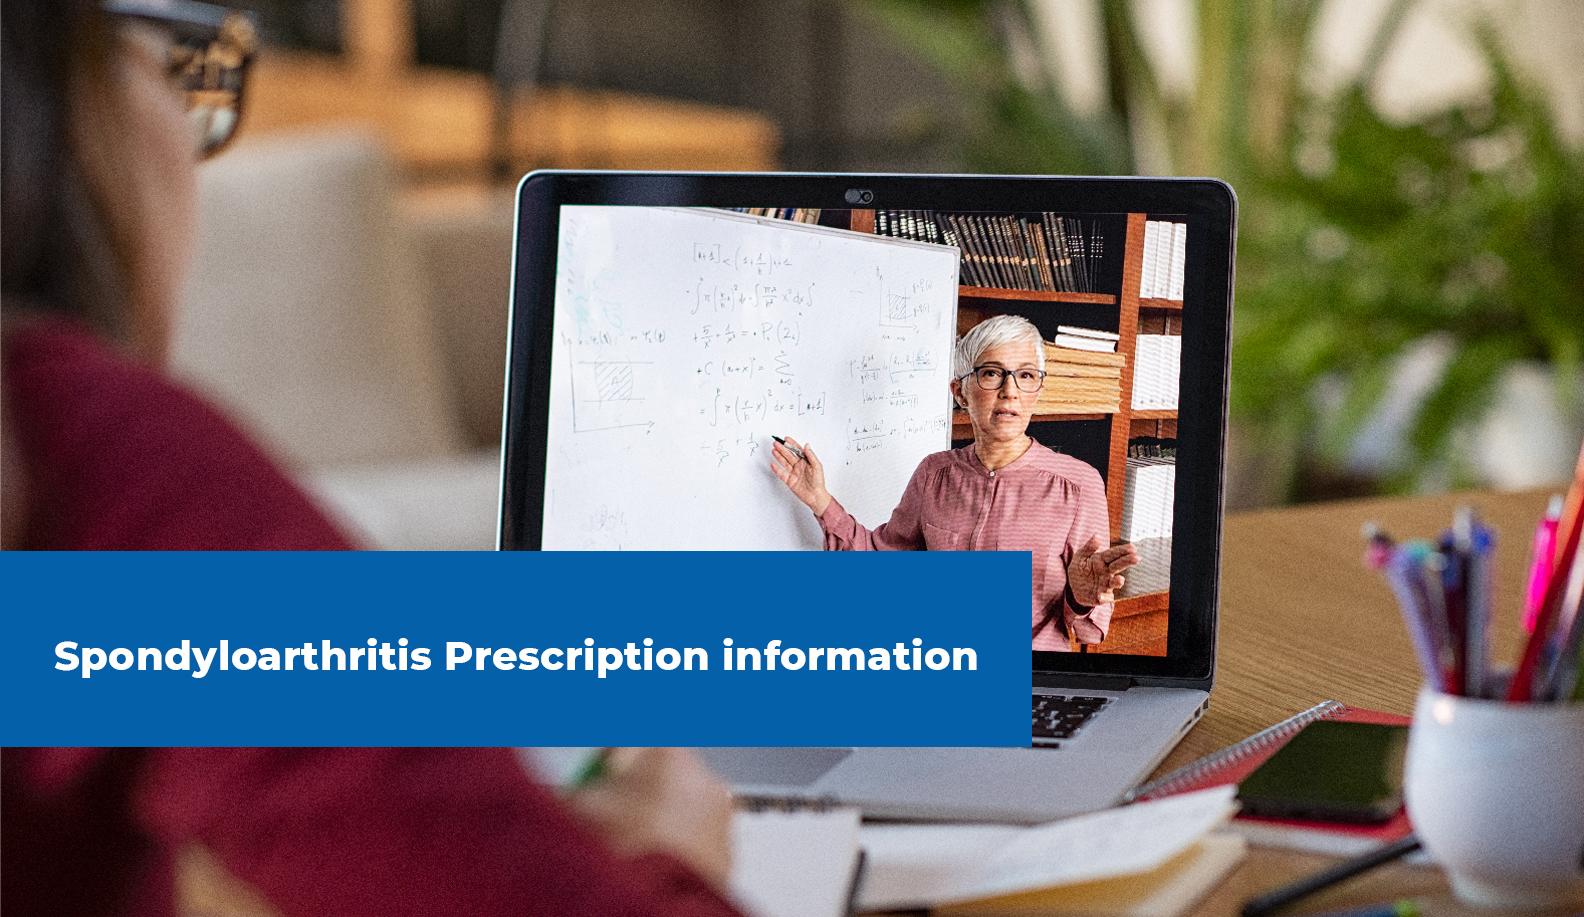 Prescription Information